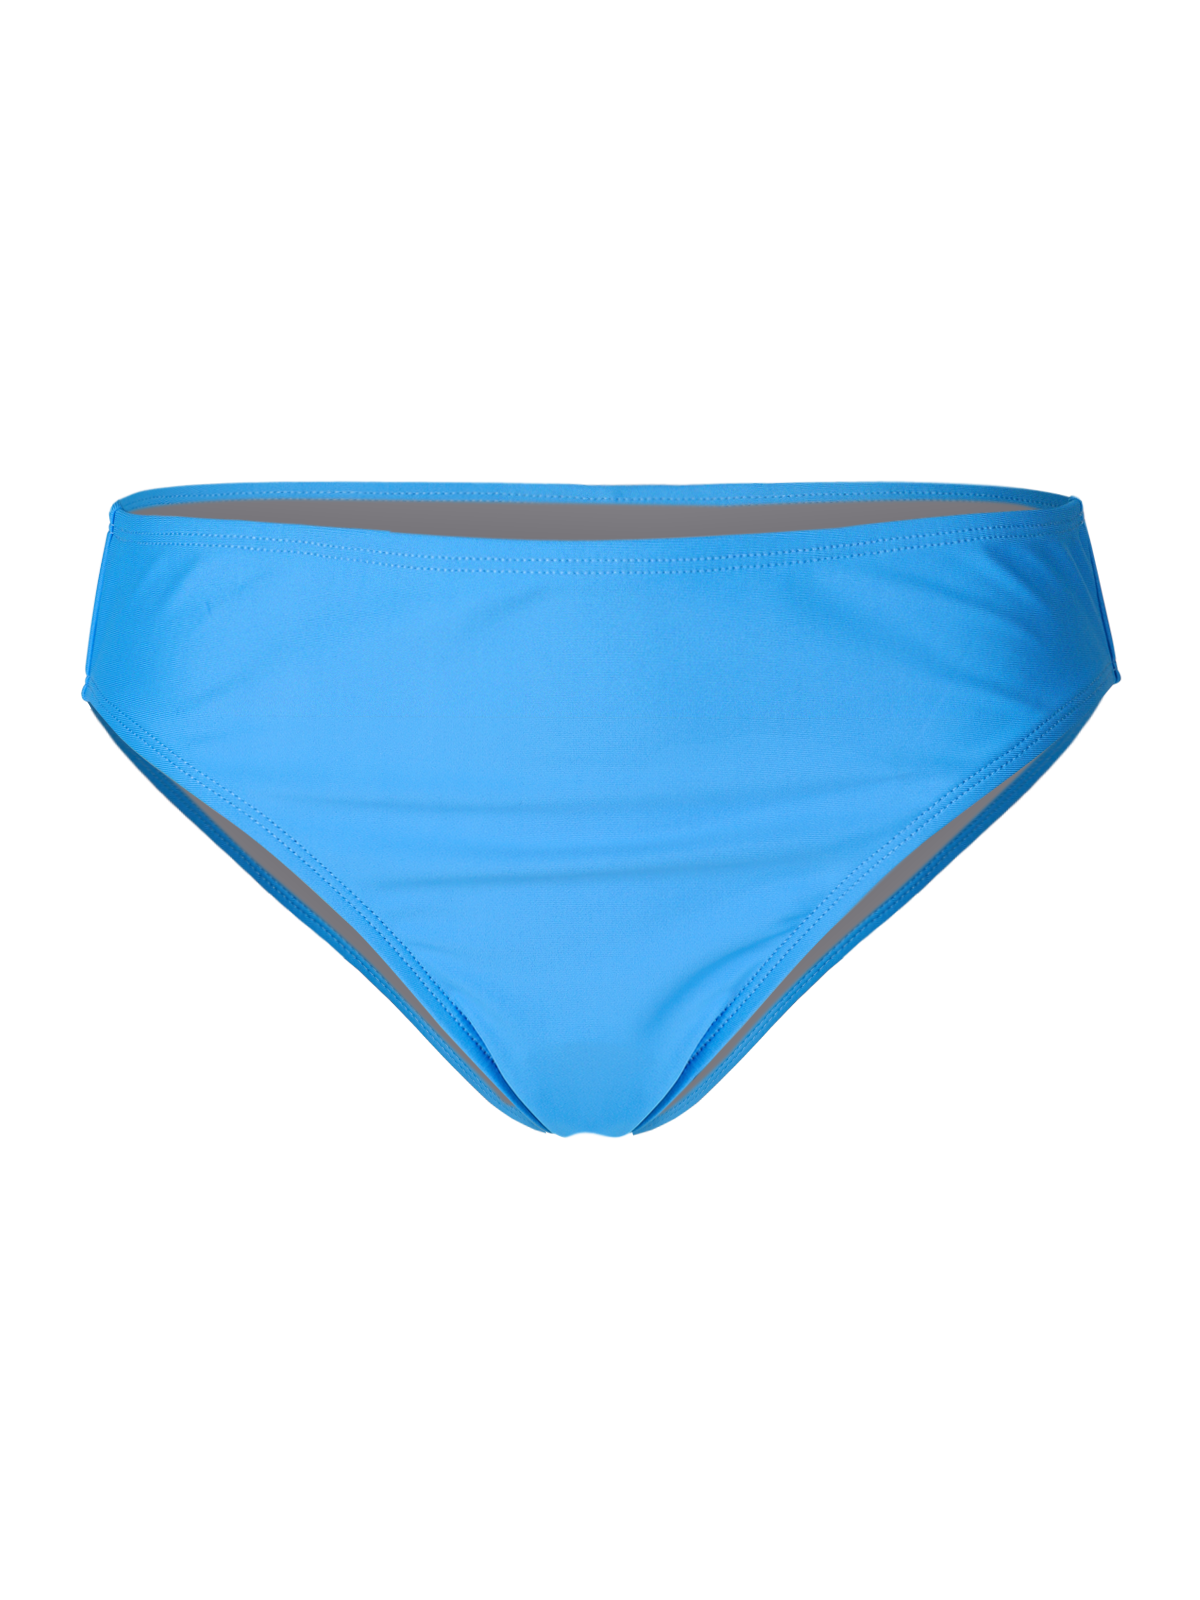 Nolina Women Bikini Bottom | Blue